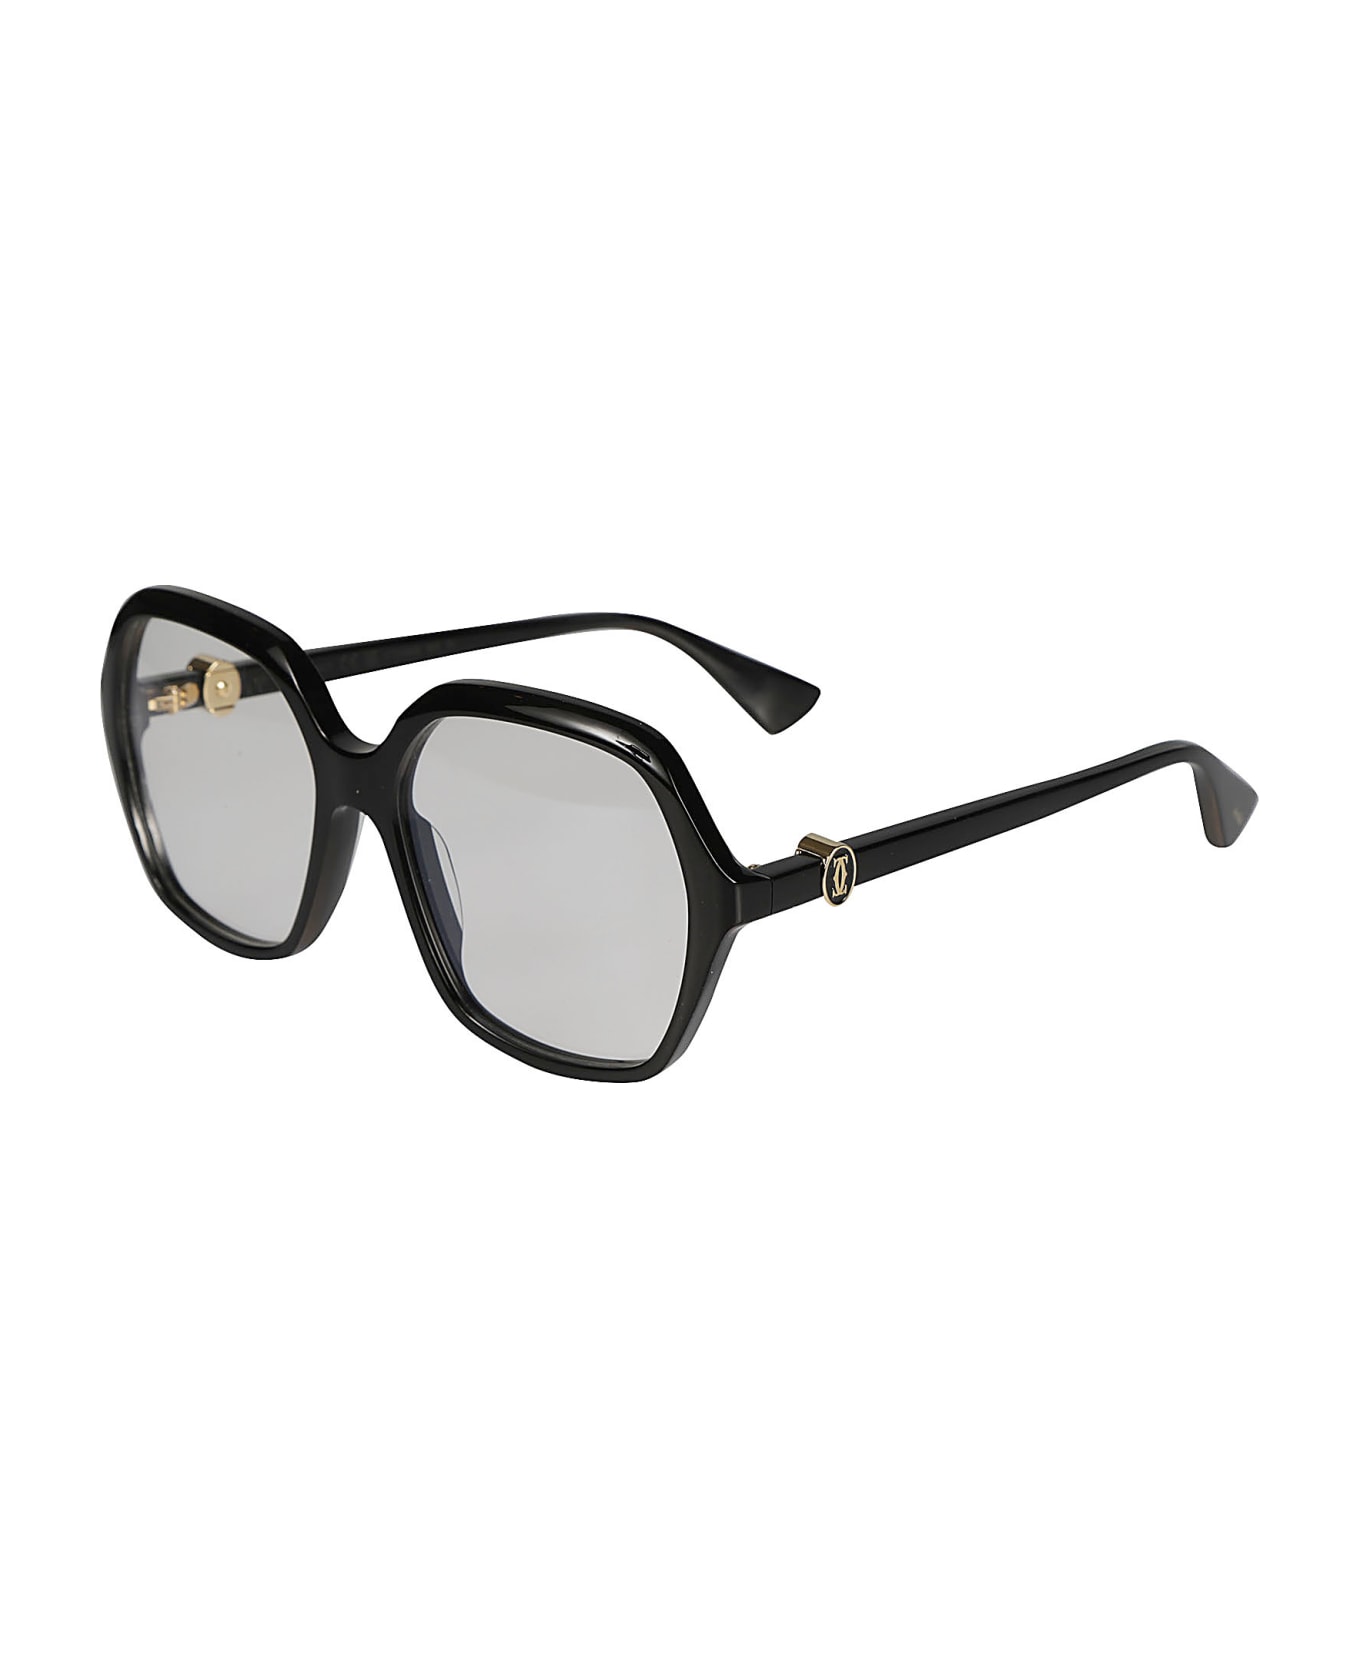 Cartier Eyewear Pentagon Rim Clear Lens Glasses - Black/Transparent